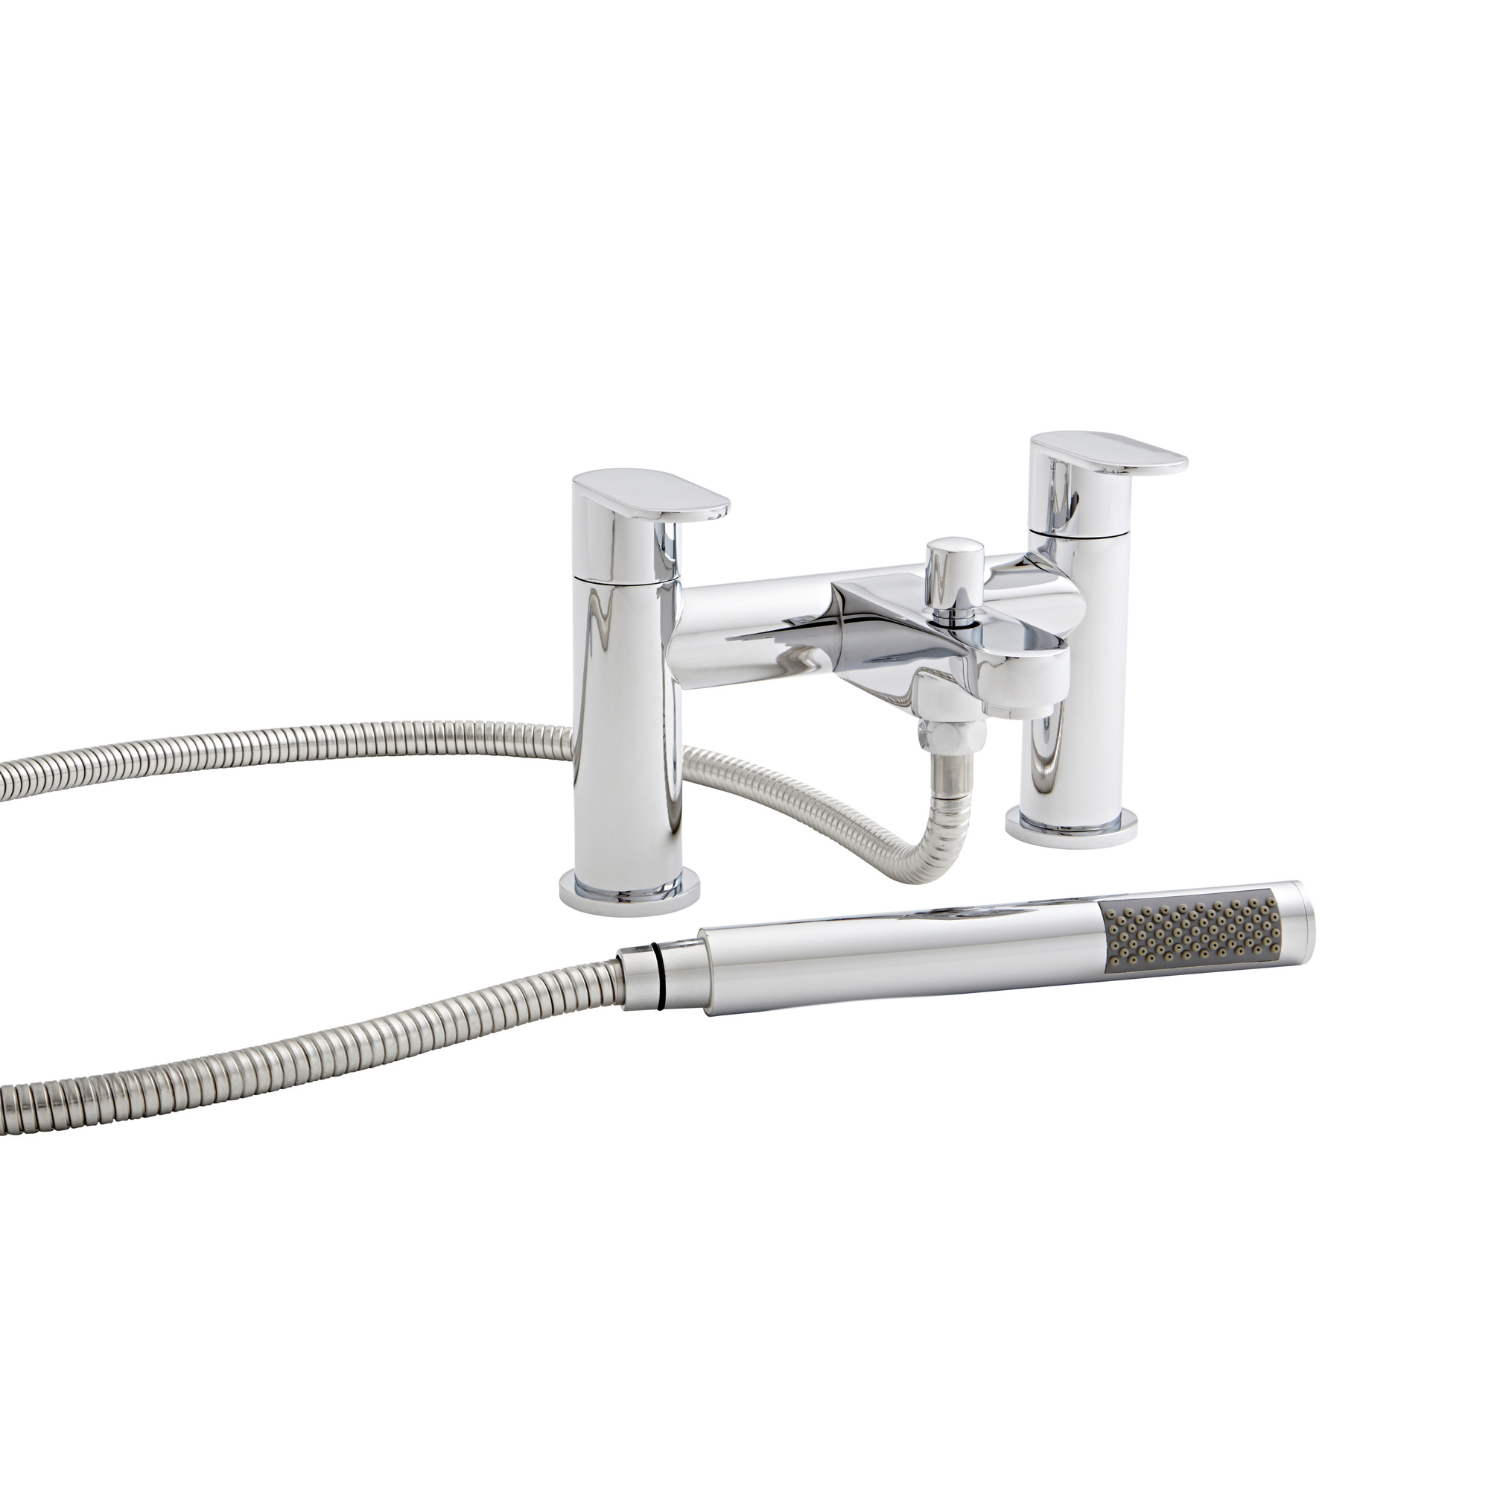 Kartell UK Logik Bath and Basin Set Taps: Shower Mixer & Mono Basin Mixer